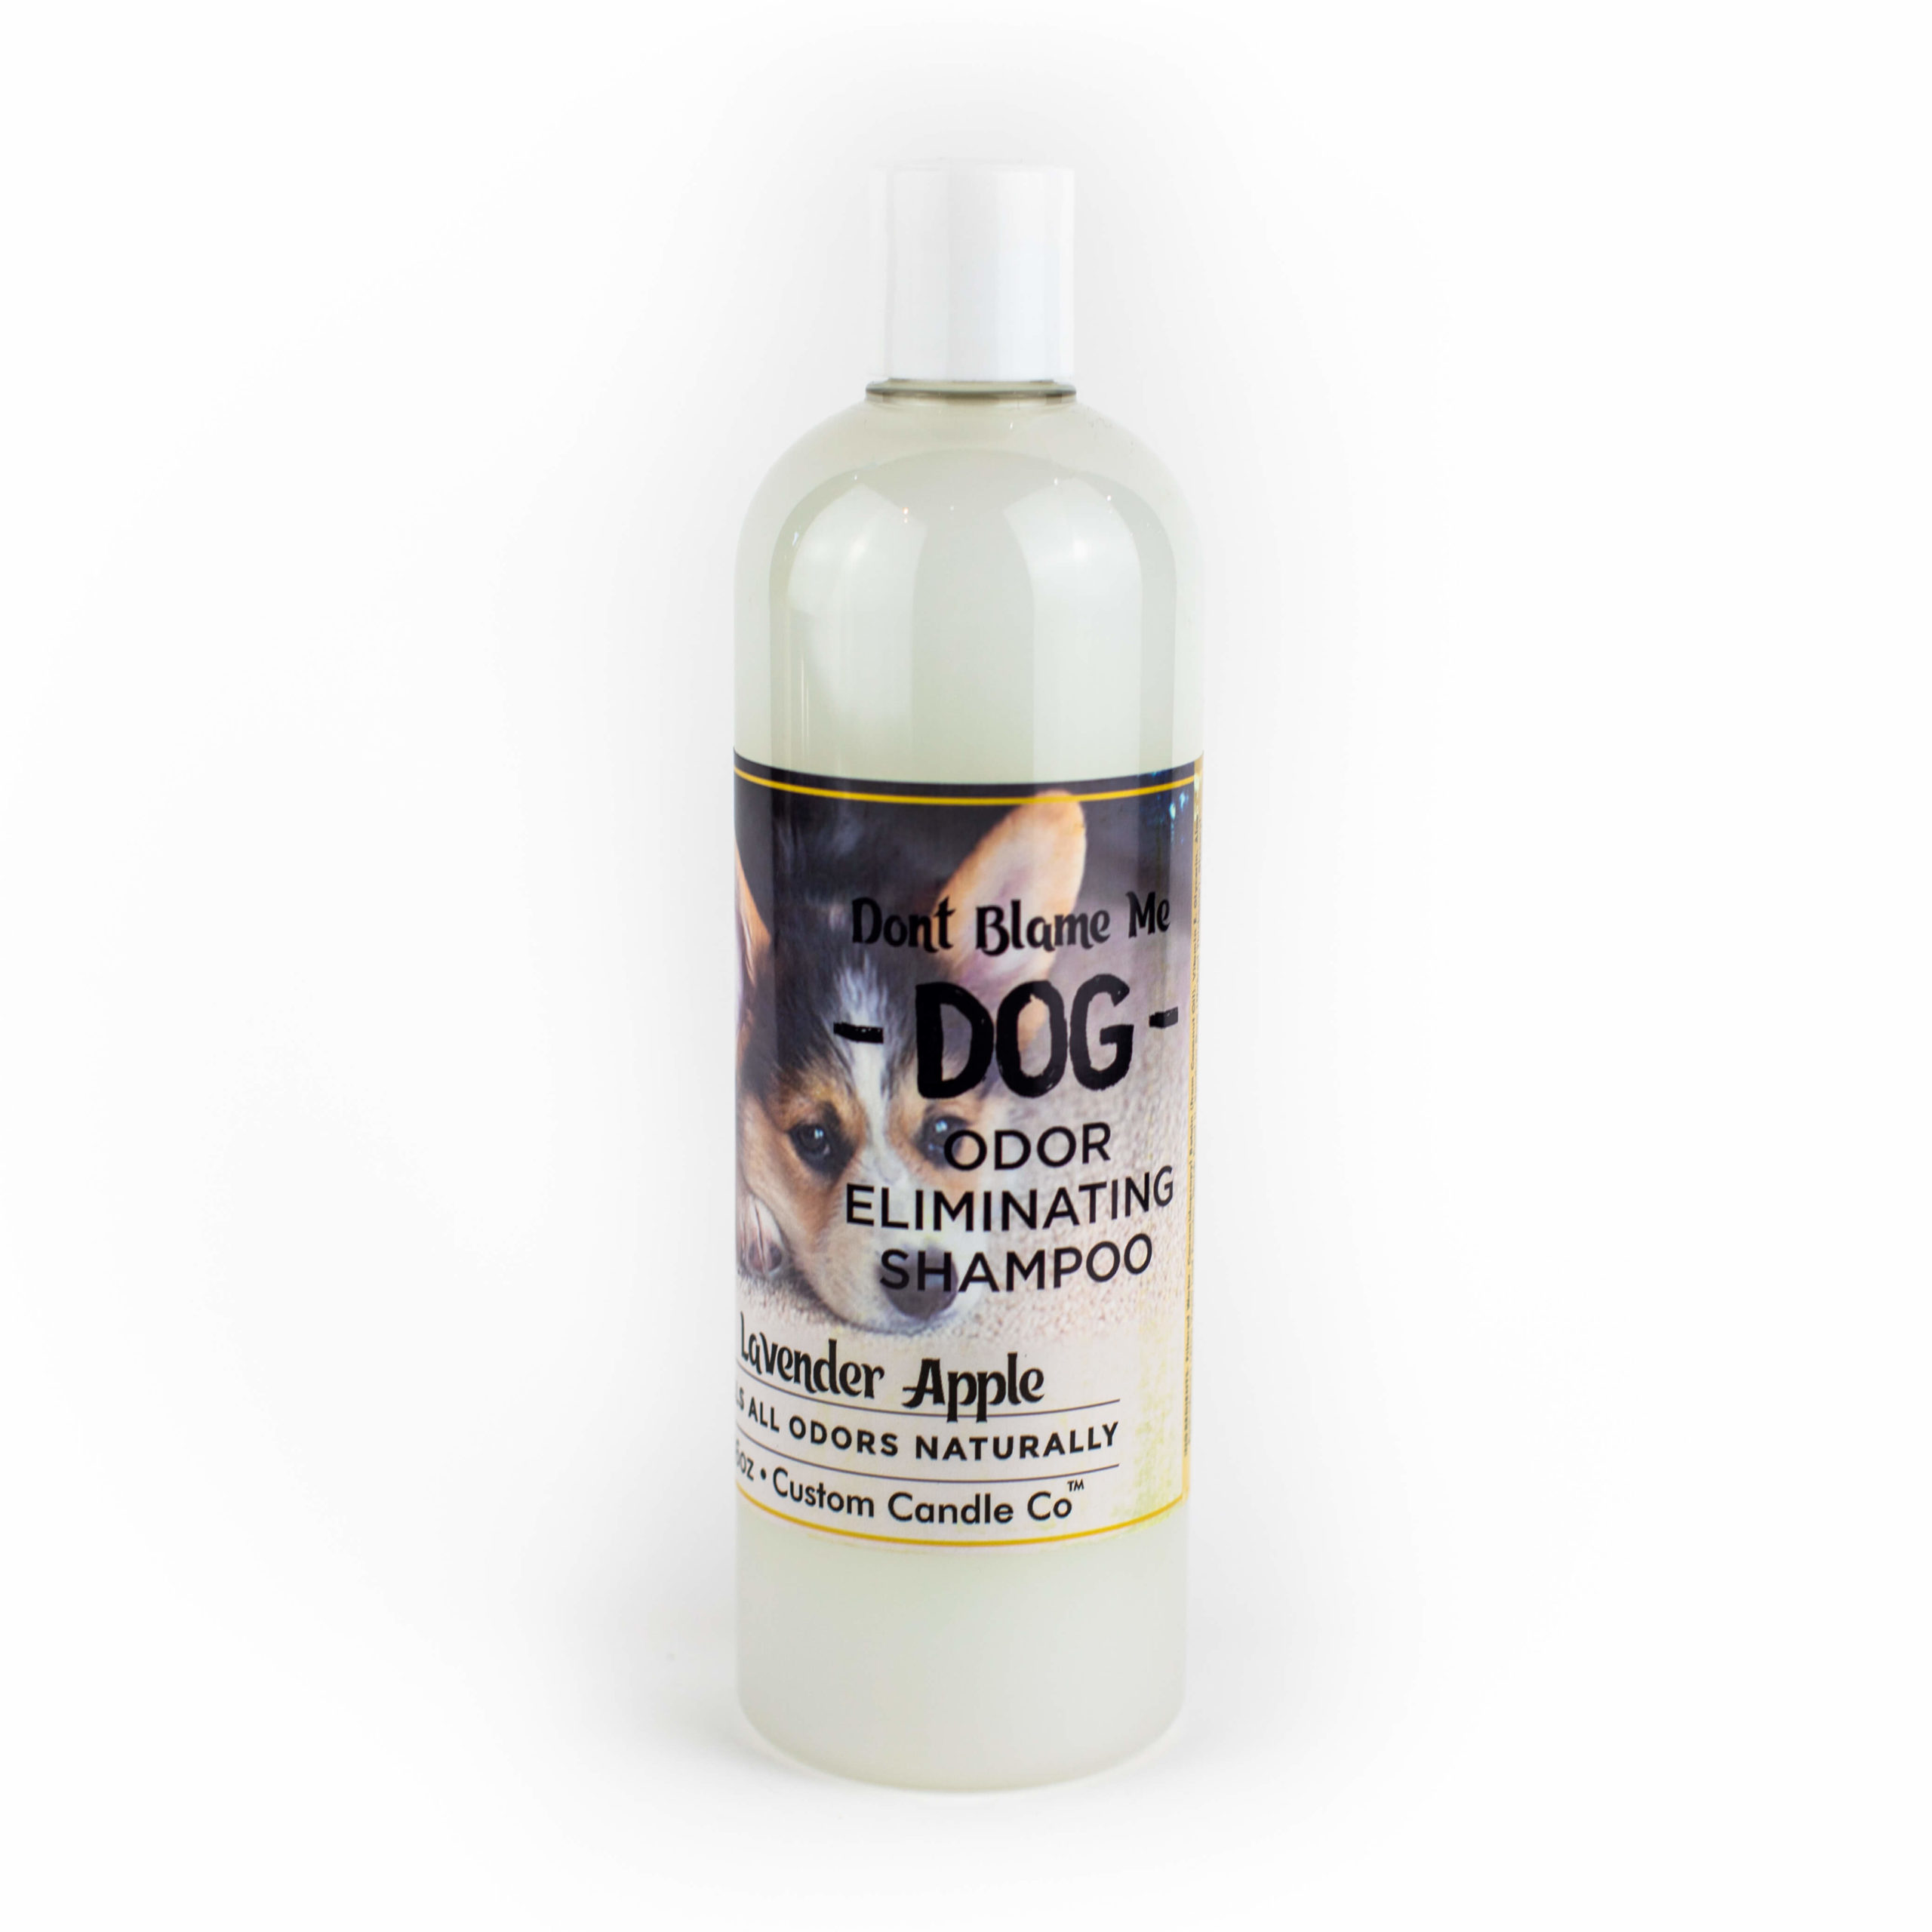 A bottle of Dog Shampoo - Lavender Apple 16oz on a white background.